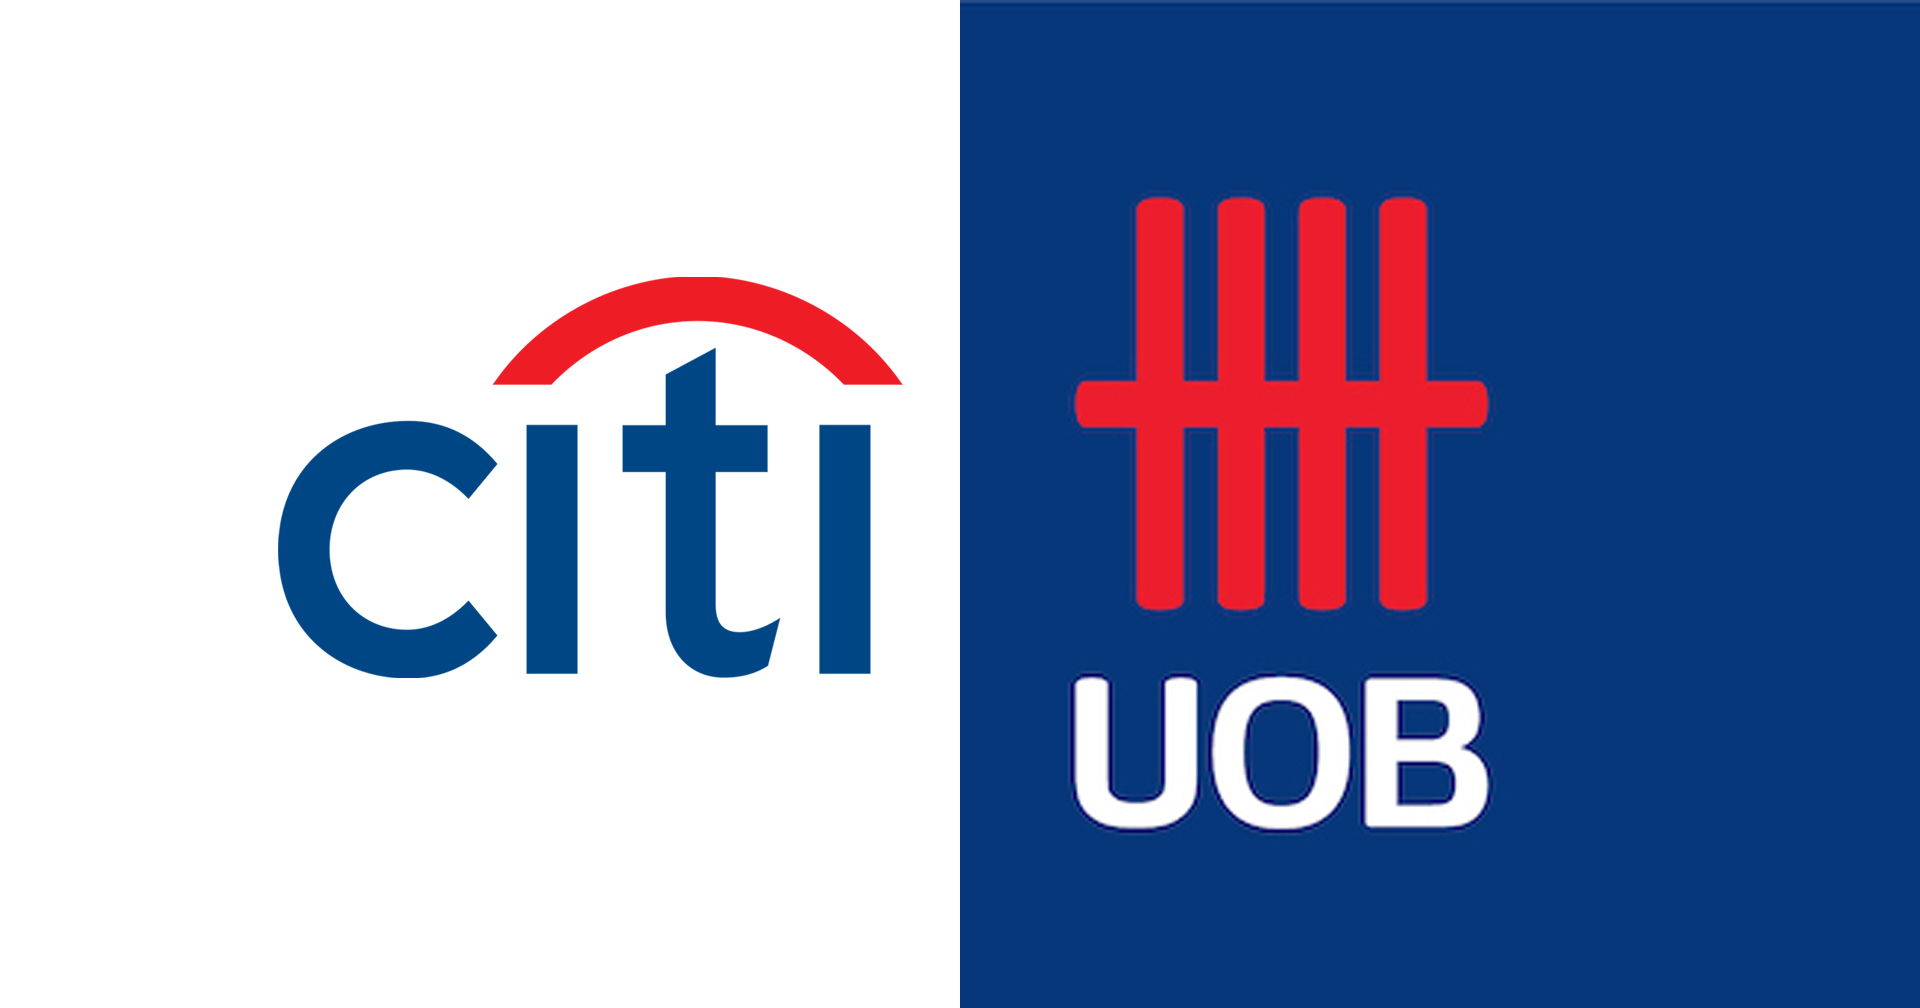 Citi ส่งต่อ Retail Banking และธุรกิจบัตรเครดิตในไทยและเพื่อนบ้านให้กับ UOB